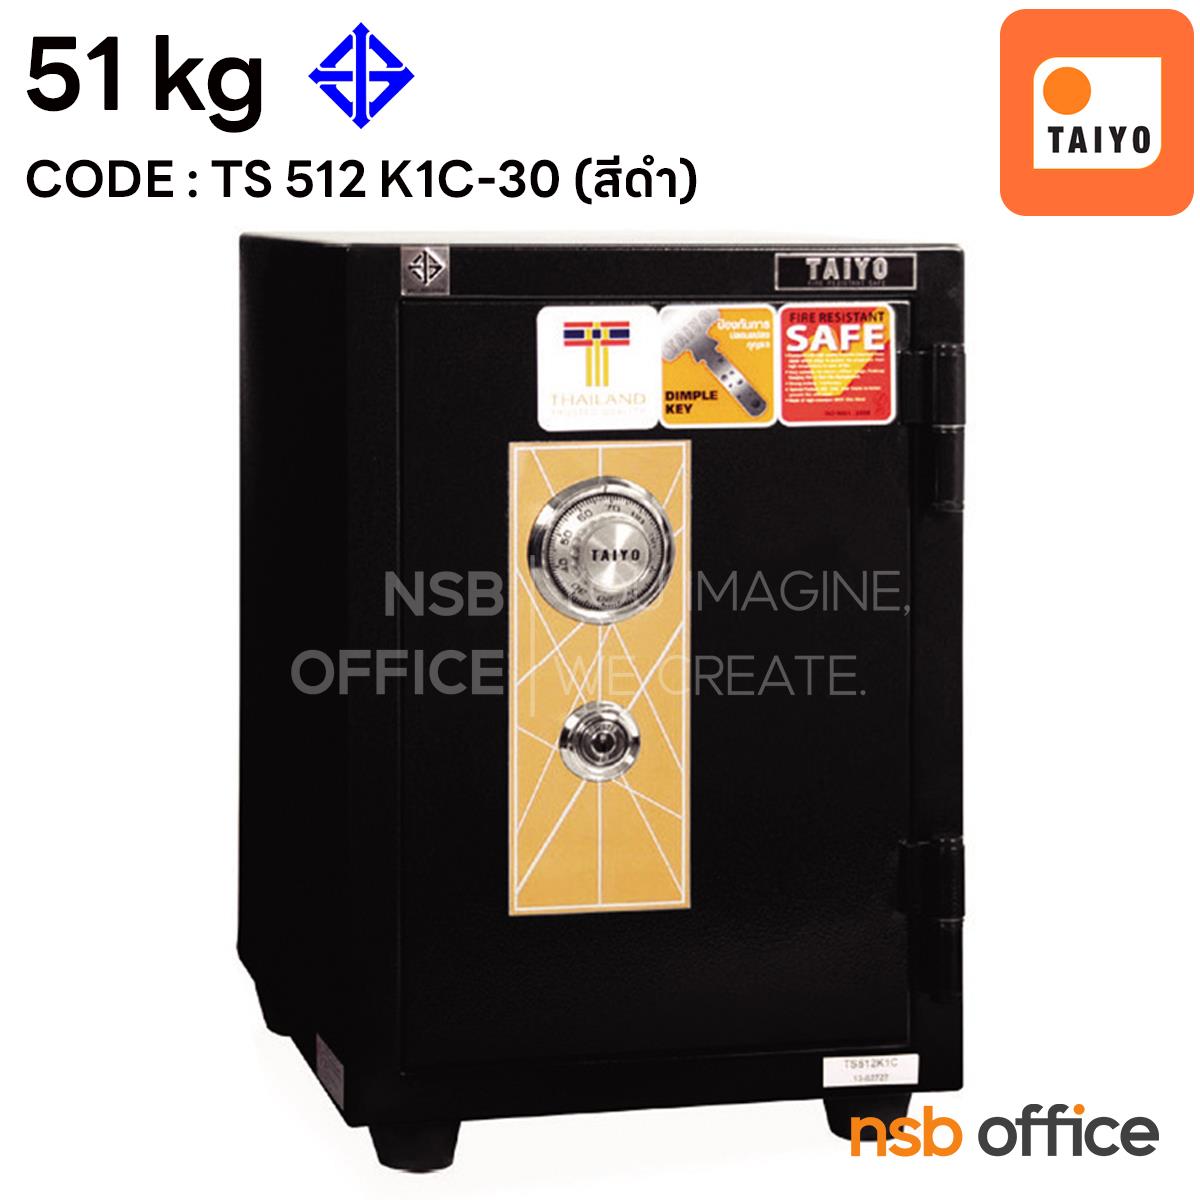 F01A055: ตู้เซฟ TAIYO 51 กก. 1 กุญแจ 1 รหัส (TS 512 K1C-30) สีดำ   